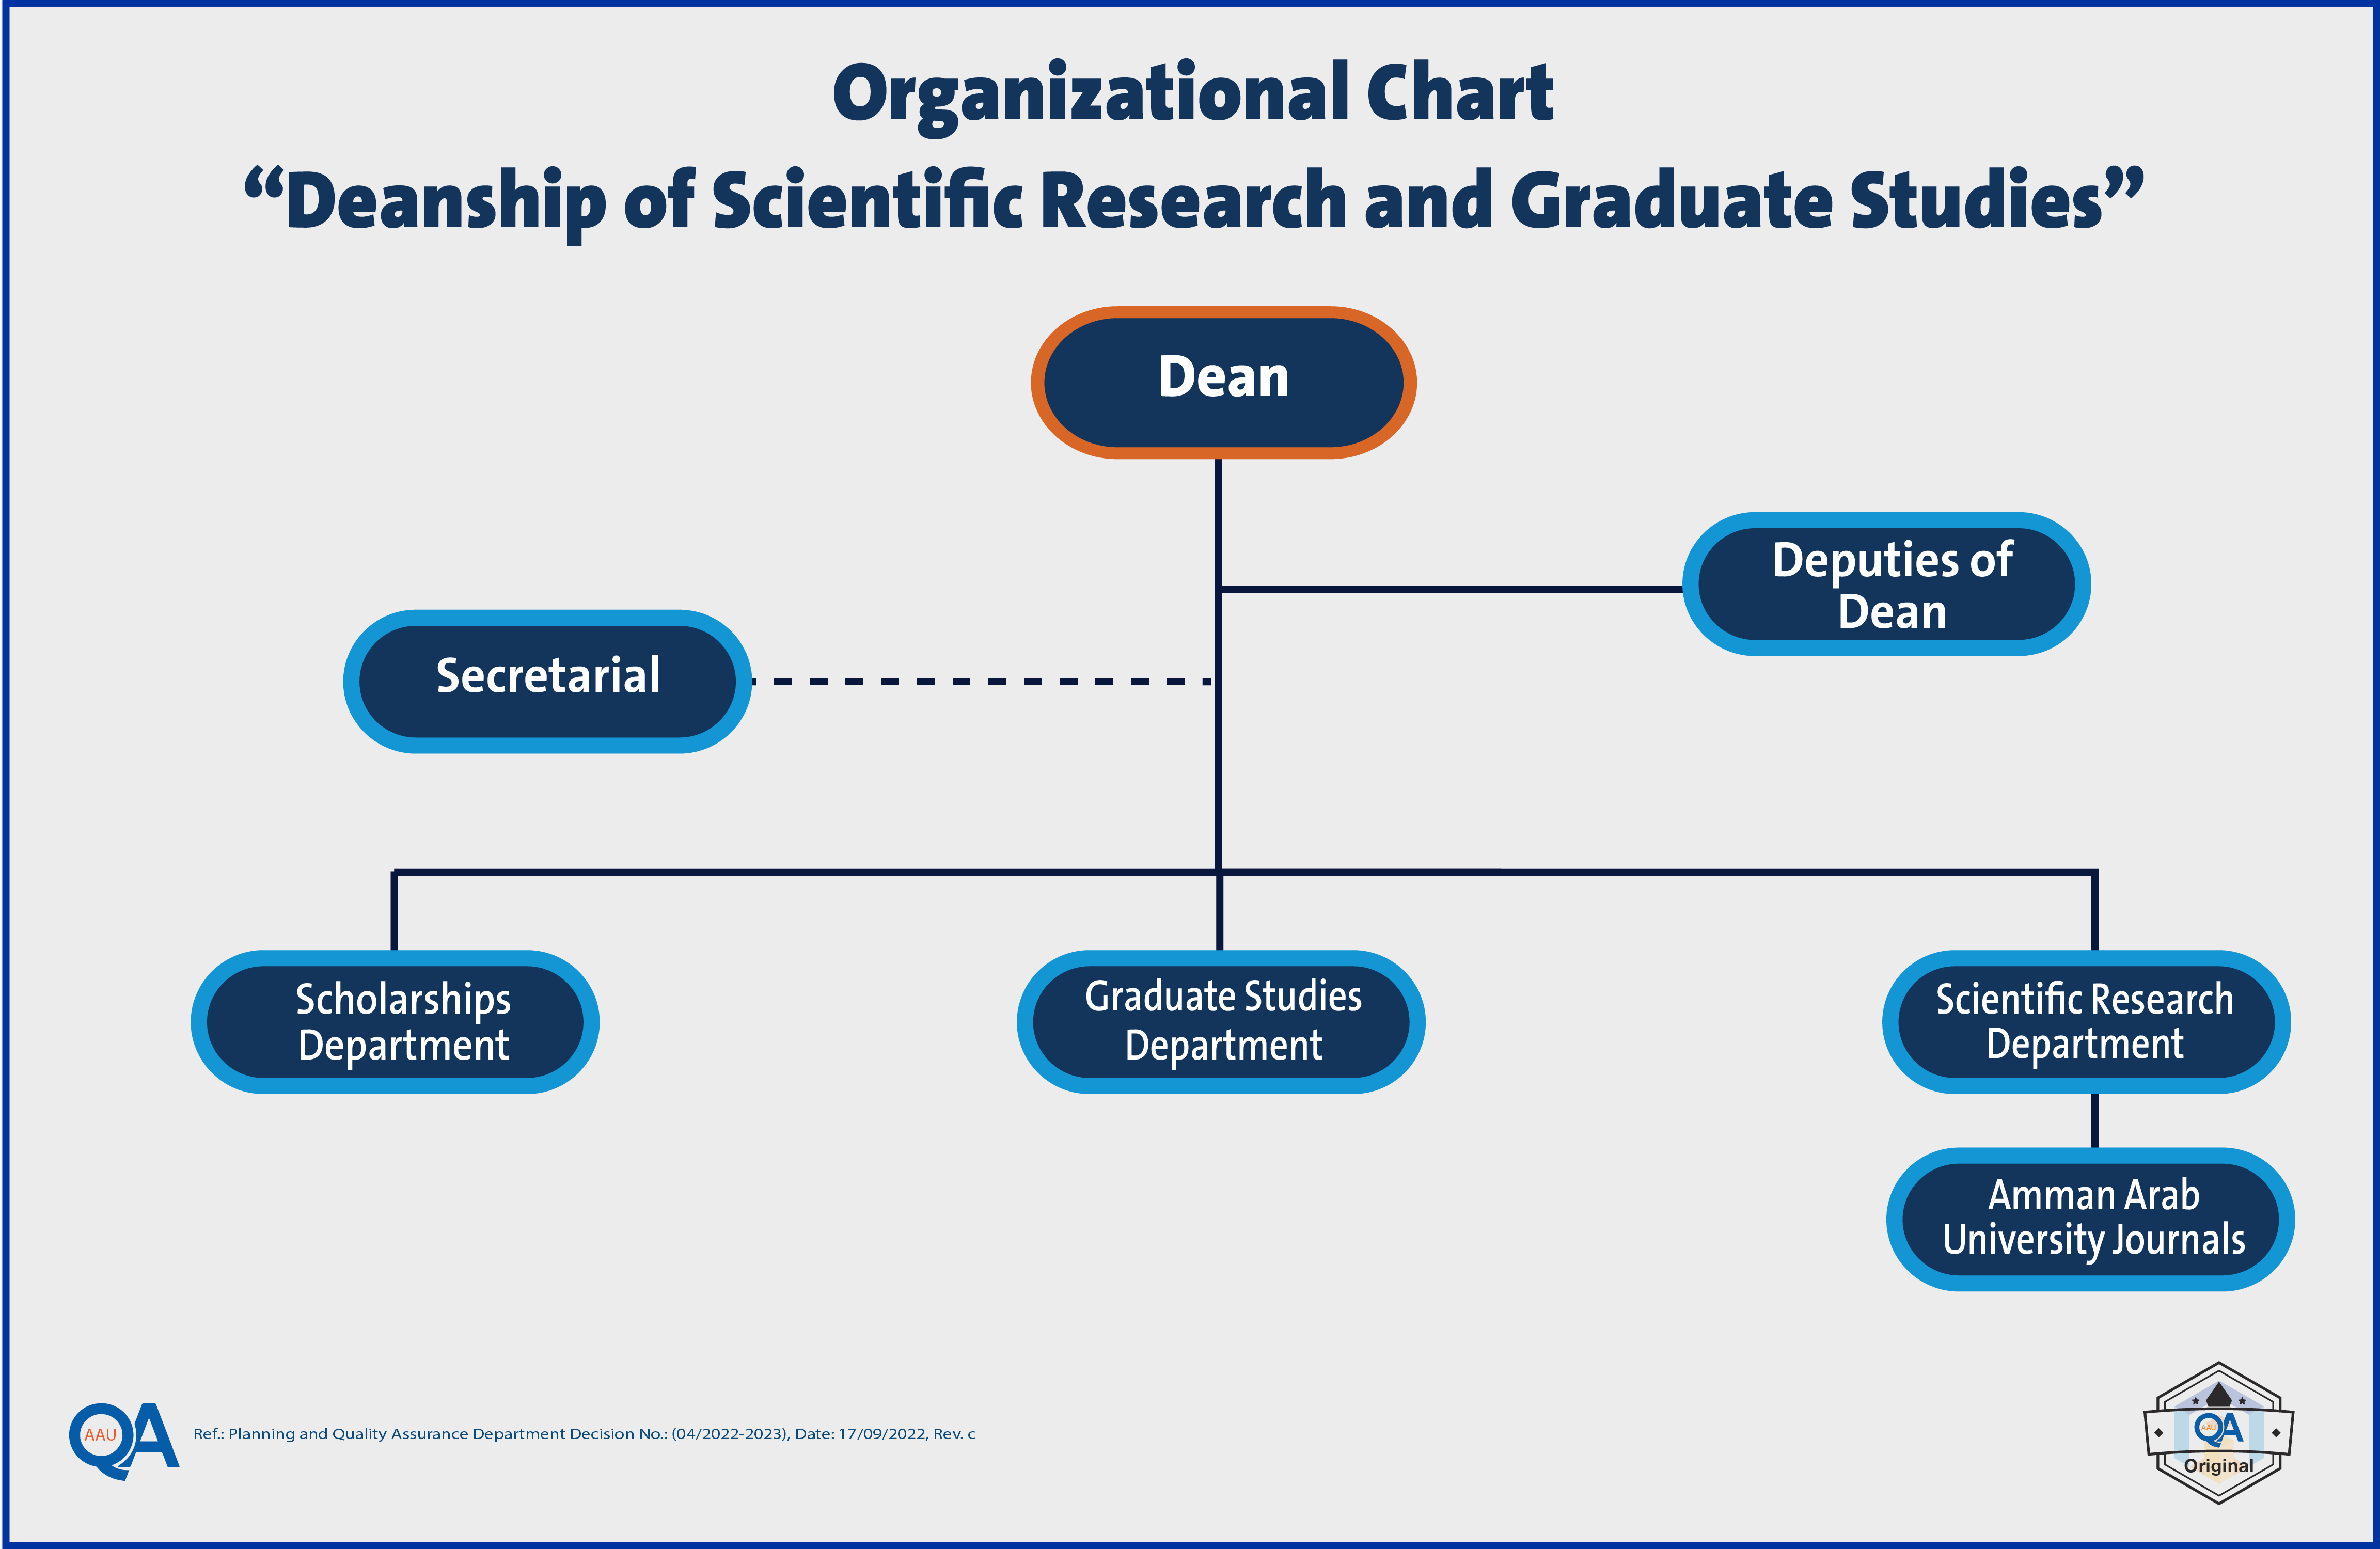 Deanship of Scientific Research and Graduate Studies